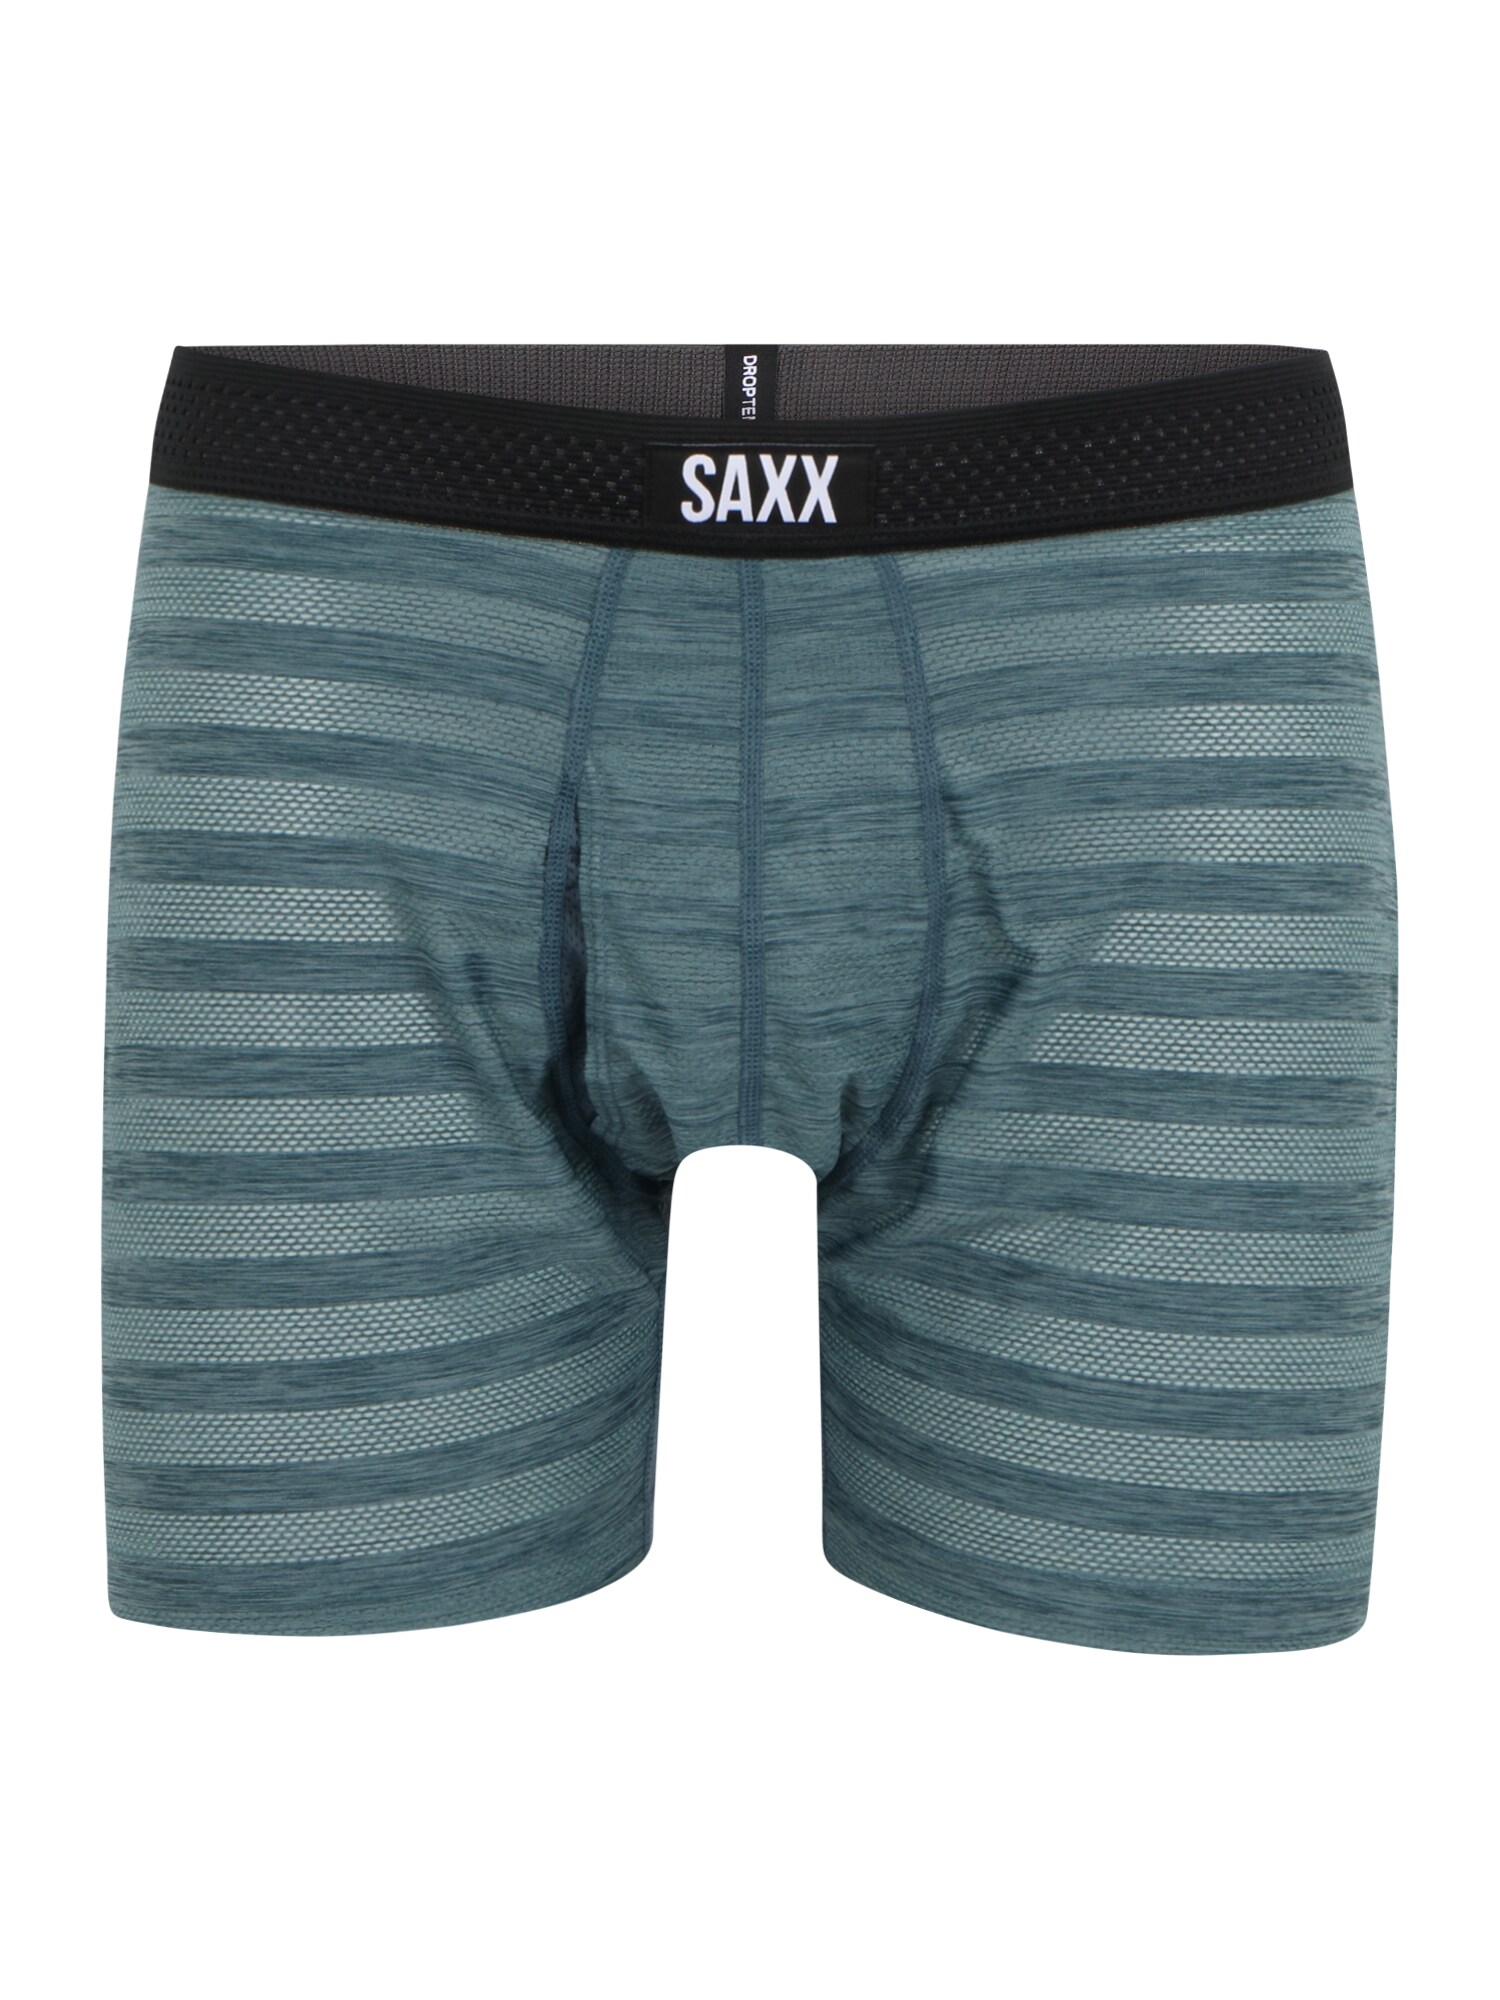 SAXX Sportinės trumpikės 'HOT SHOT' mėlyna / juoda / balta